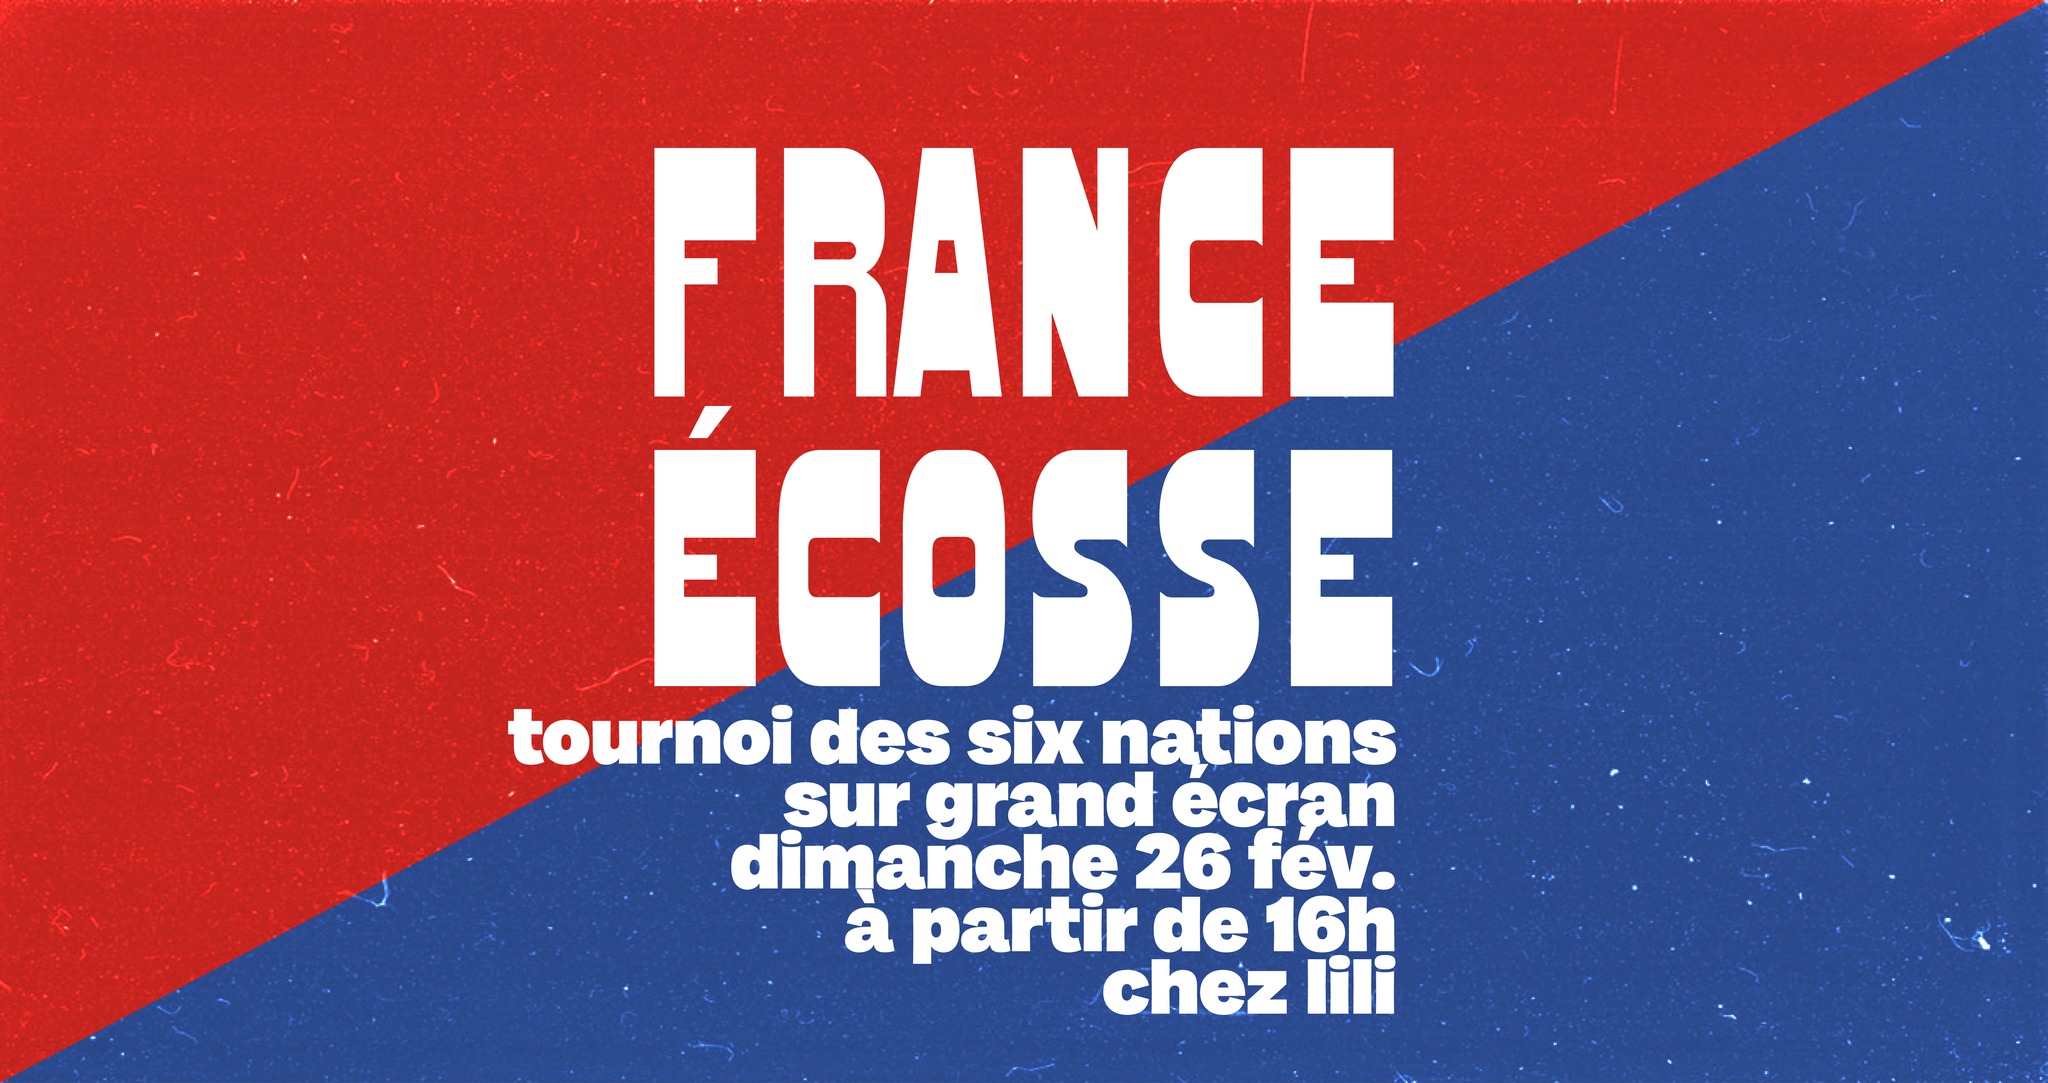 France - Ecosse